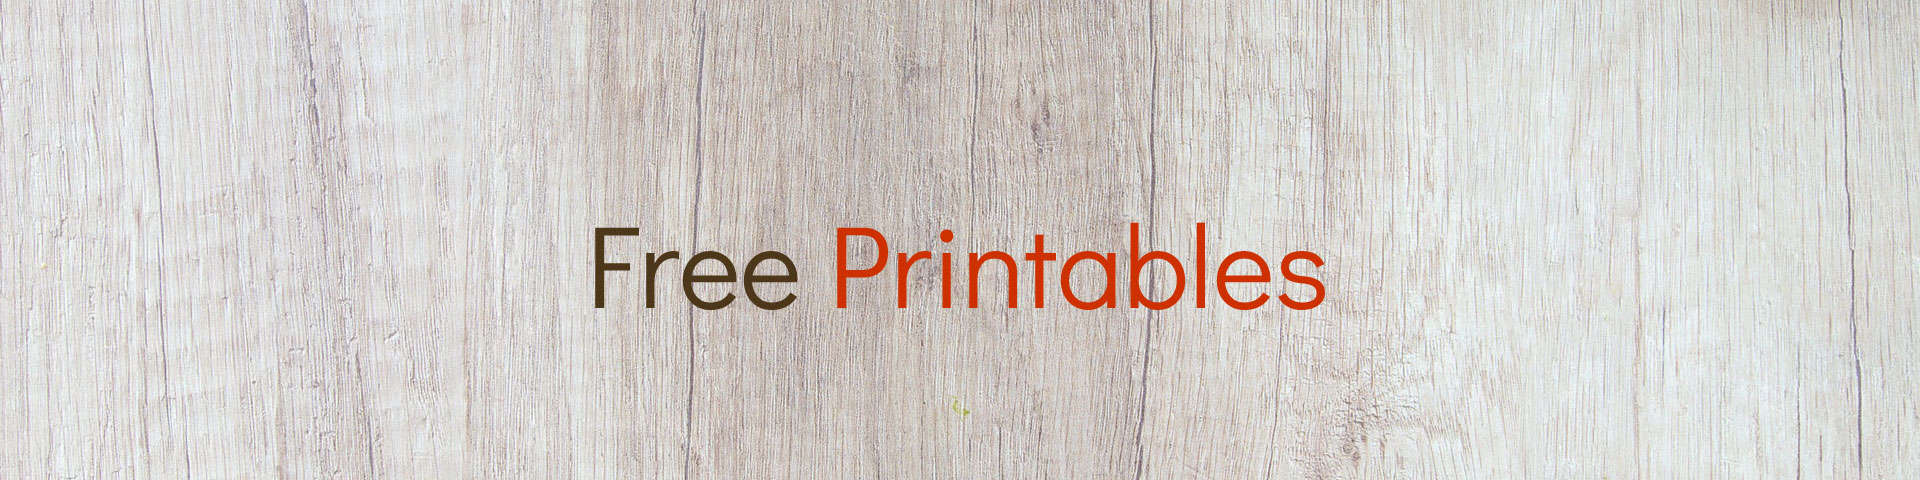 freeprintables